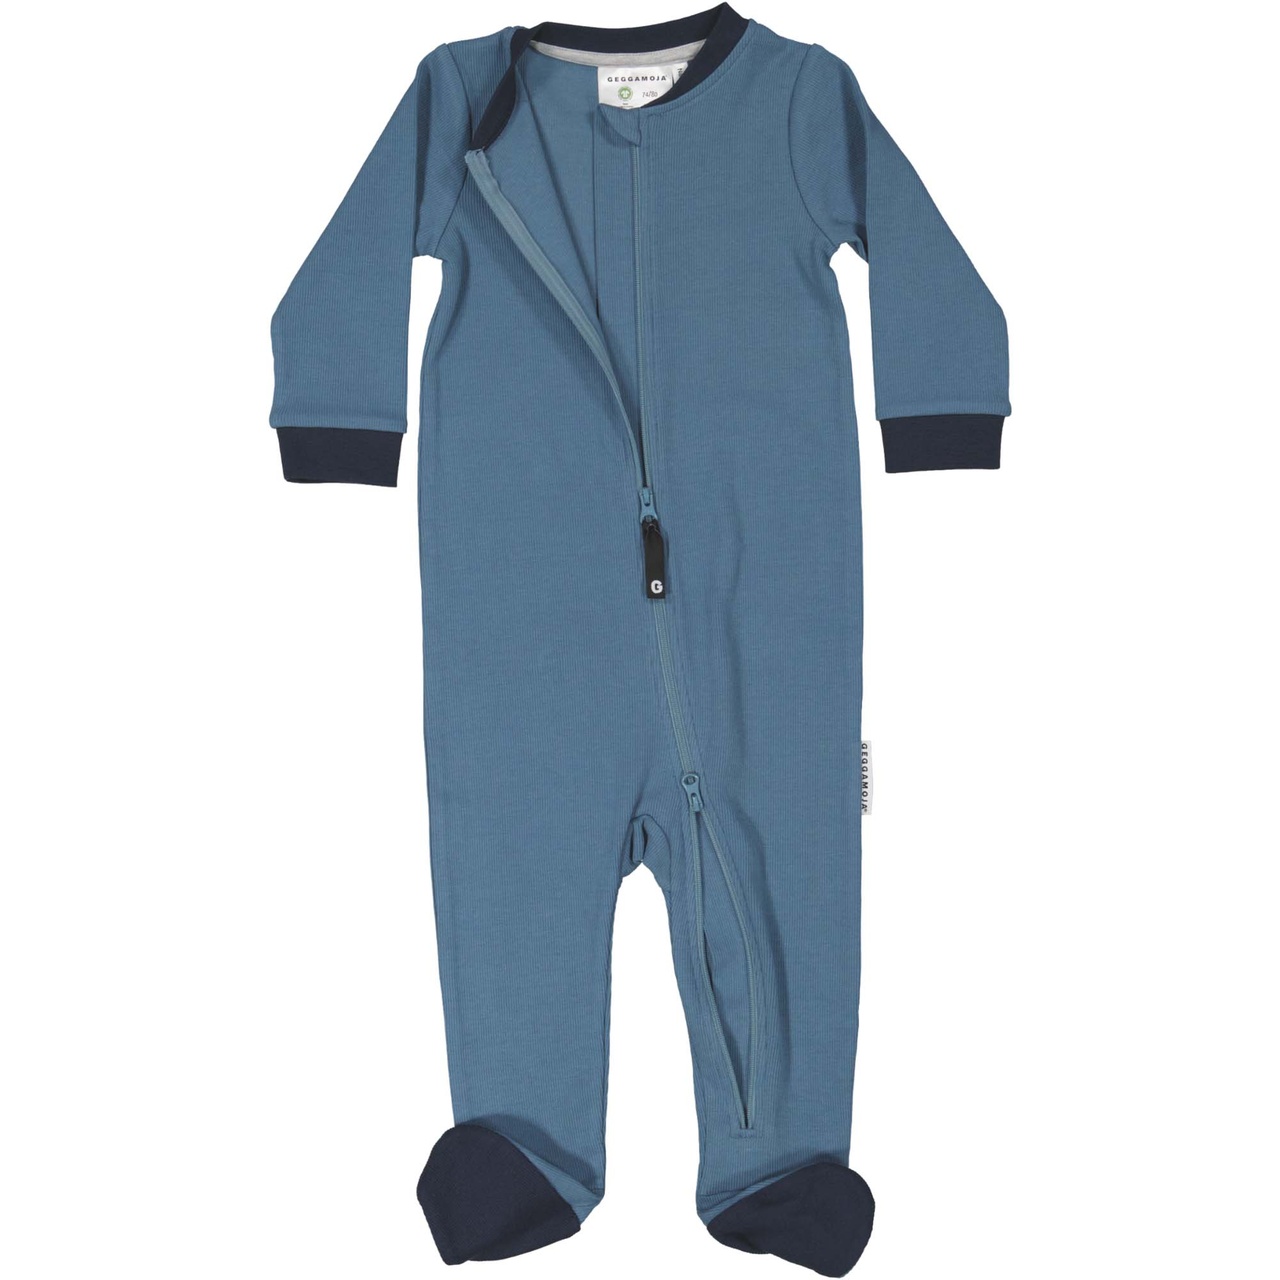 Baby pyjamas 2-way zip Blue 74/80